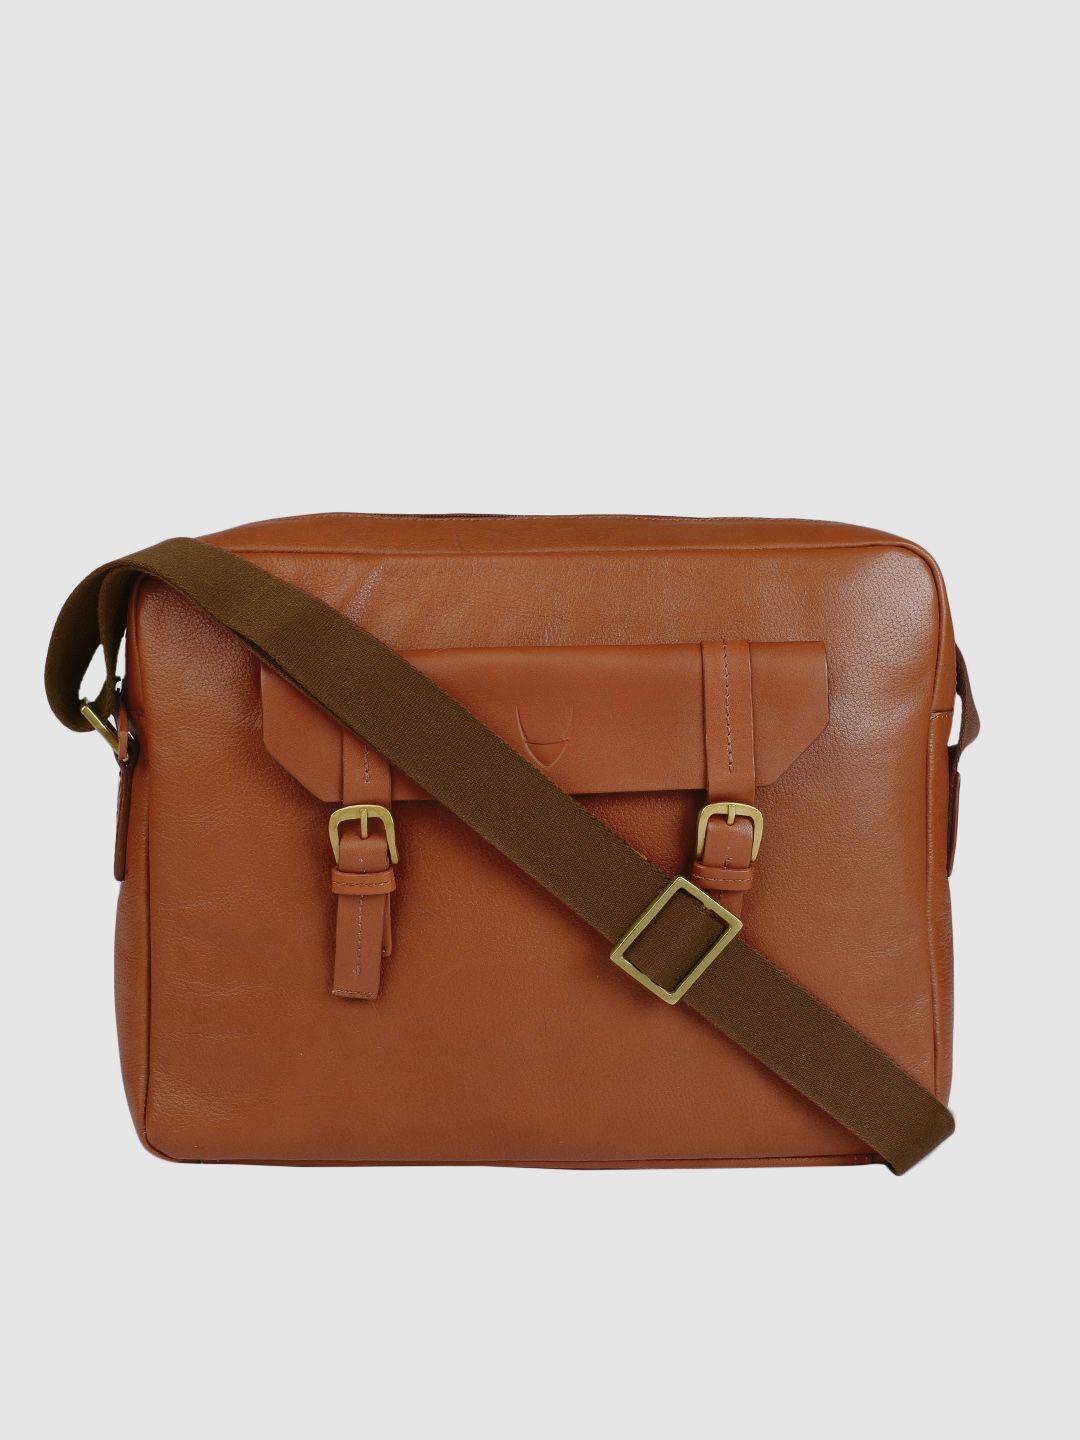 hidesign men tan-brown solid leather laptop bag